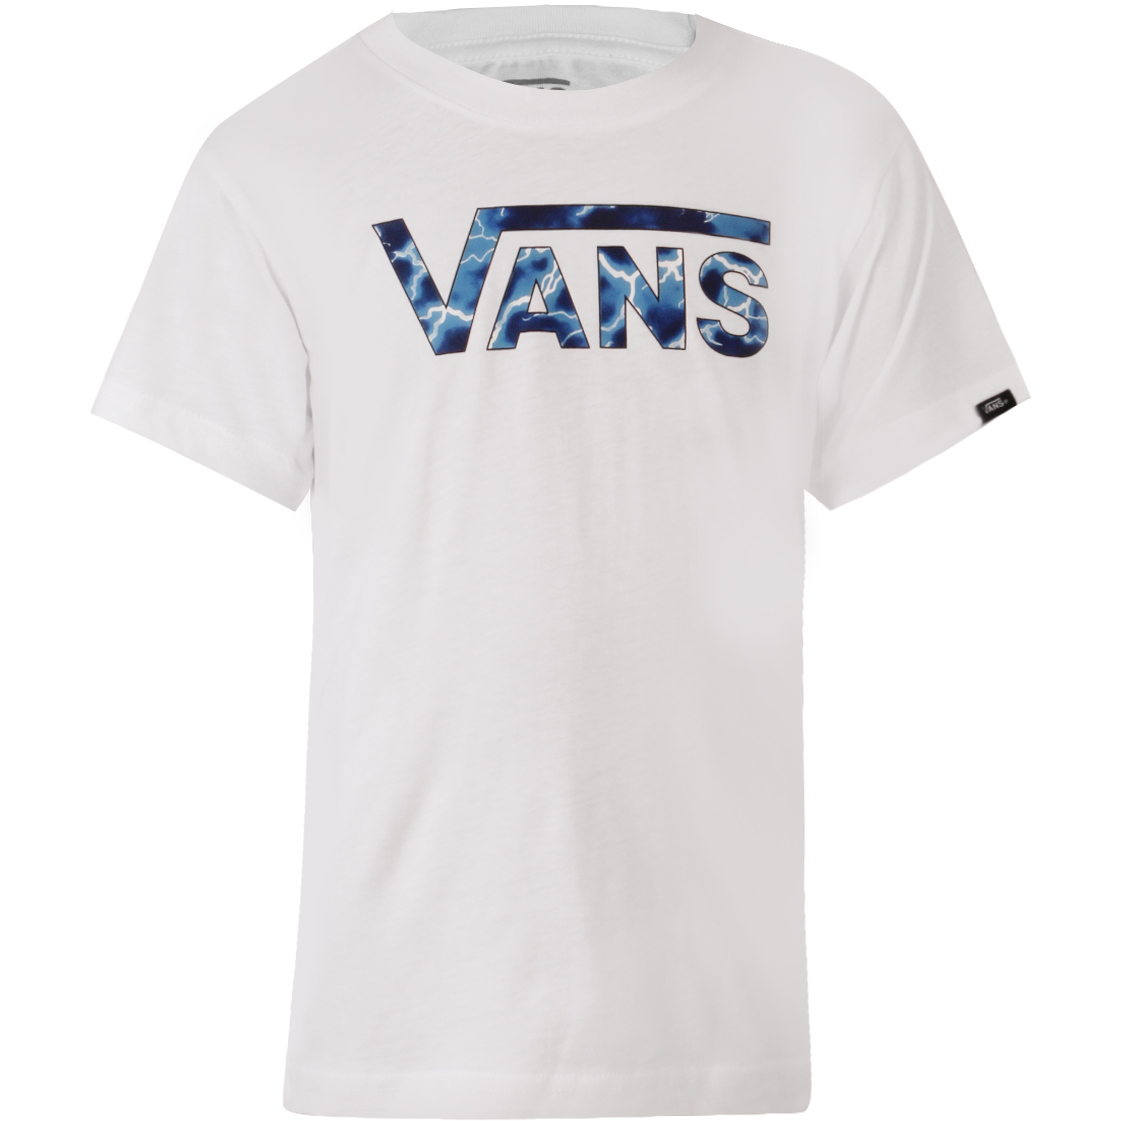 VANS T-SHIRT CLASSIC LOGO True Store White/ Blue Mascheroni Bimbo 